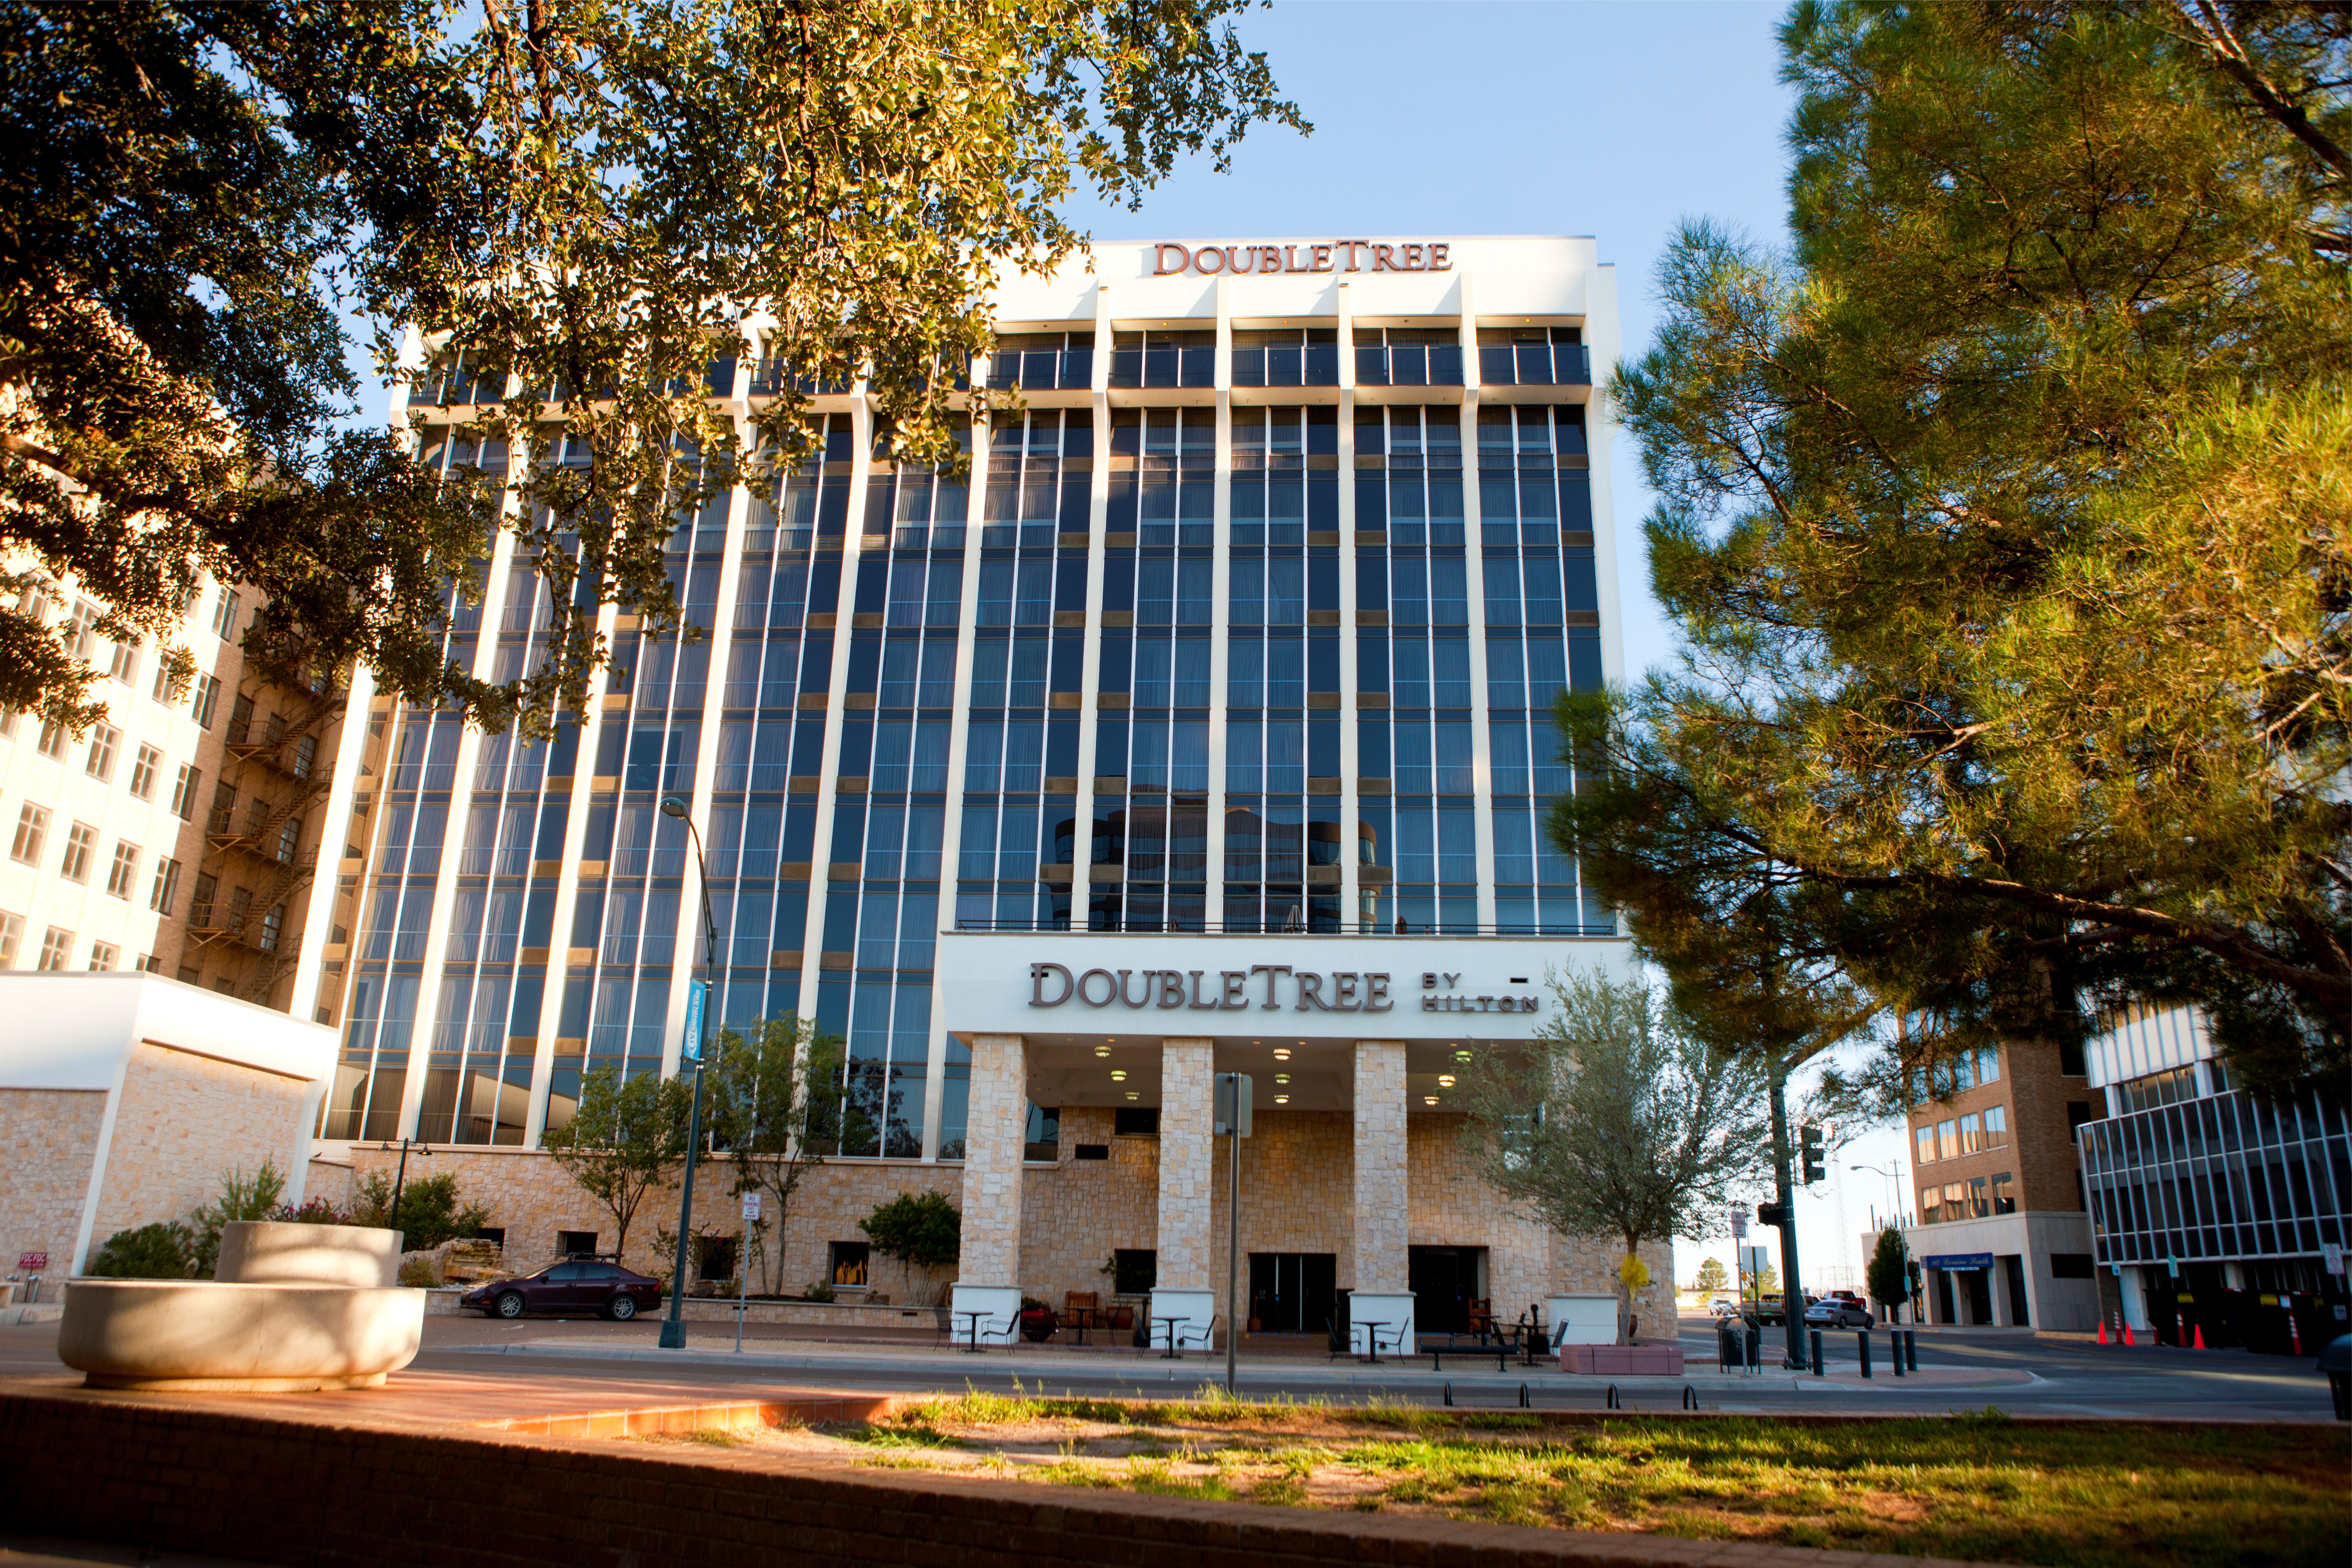 DoubleTree by Hilton Midland Plaza image